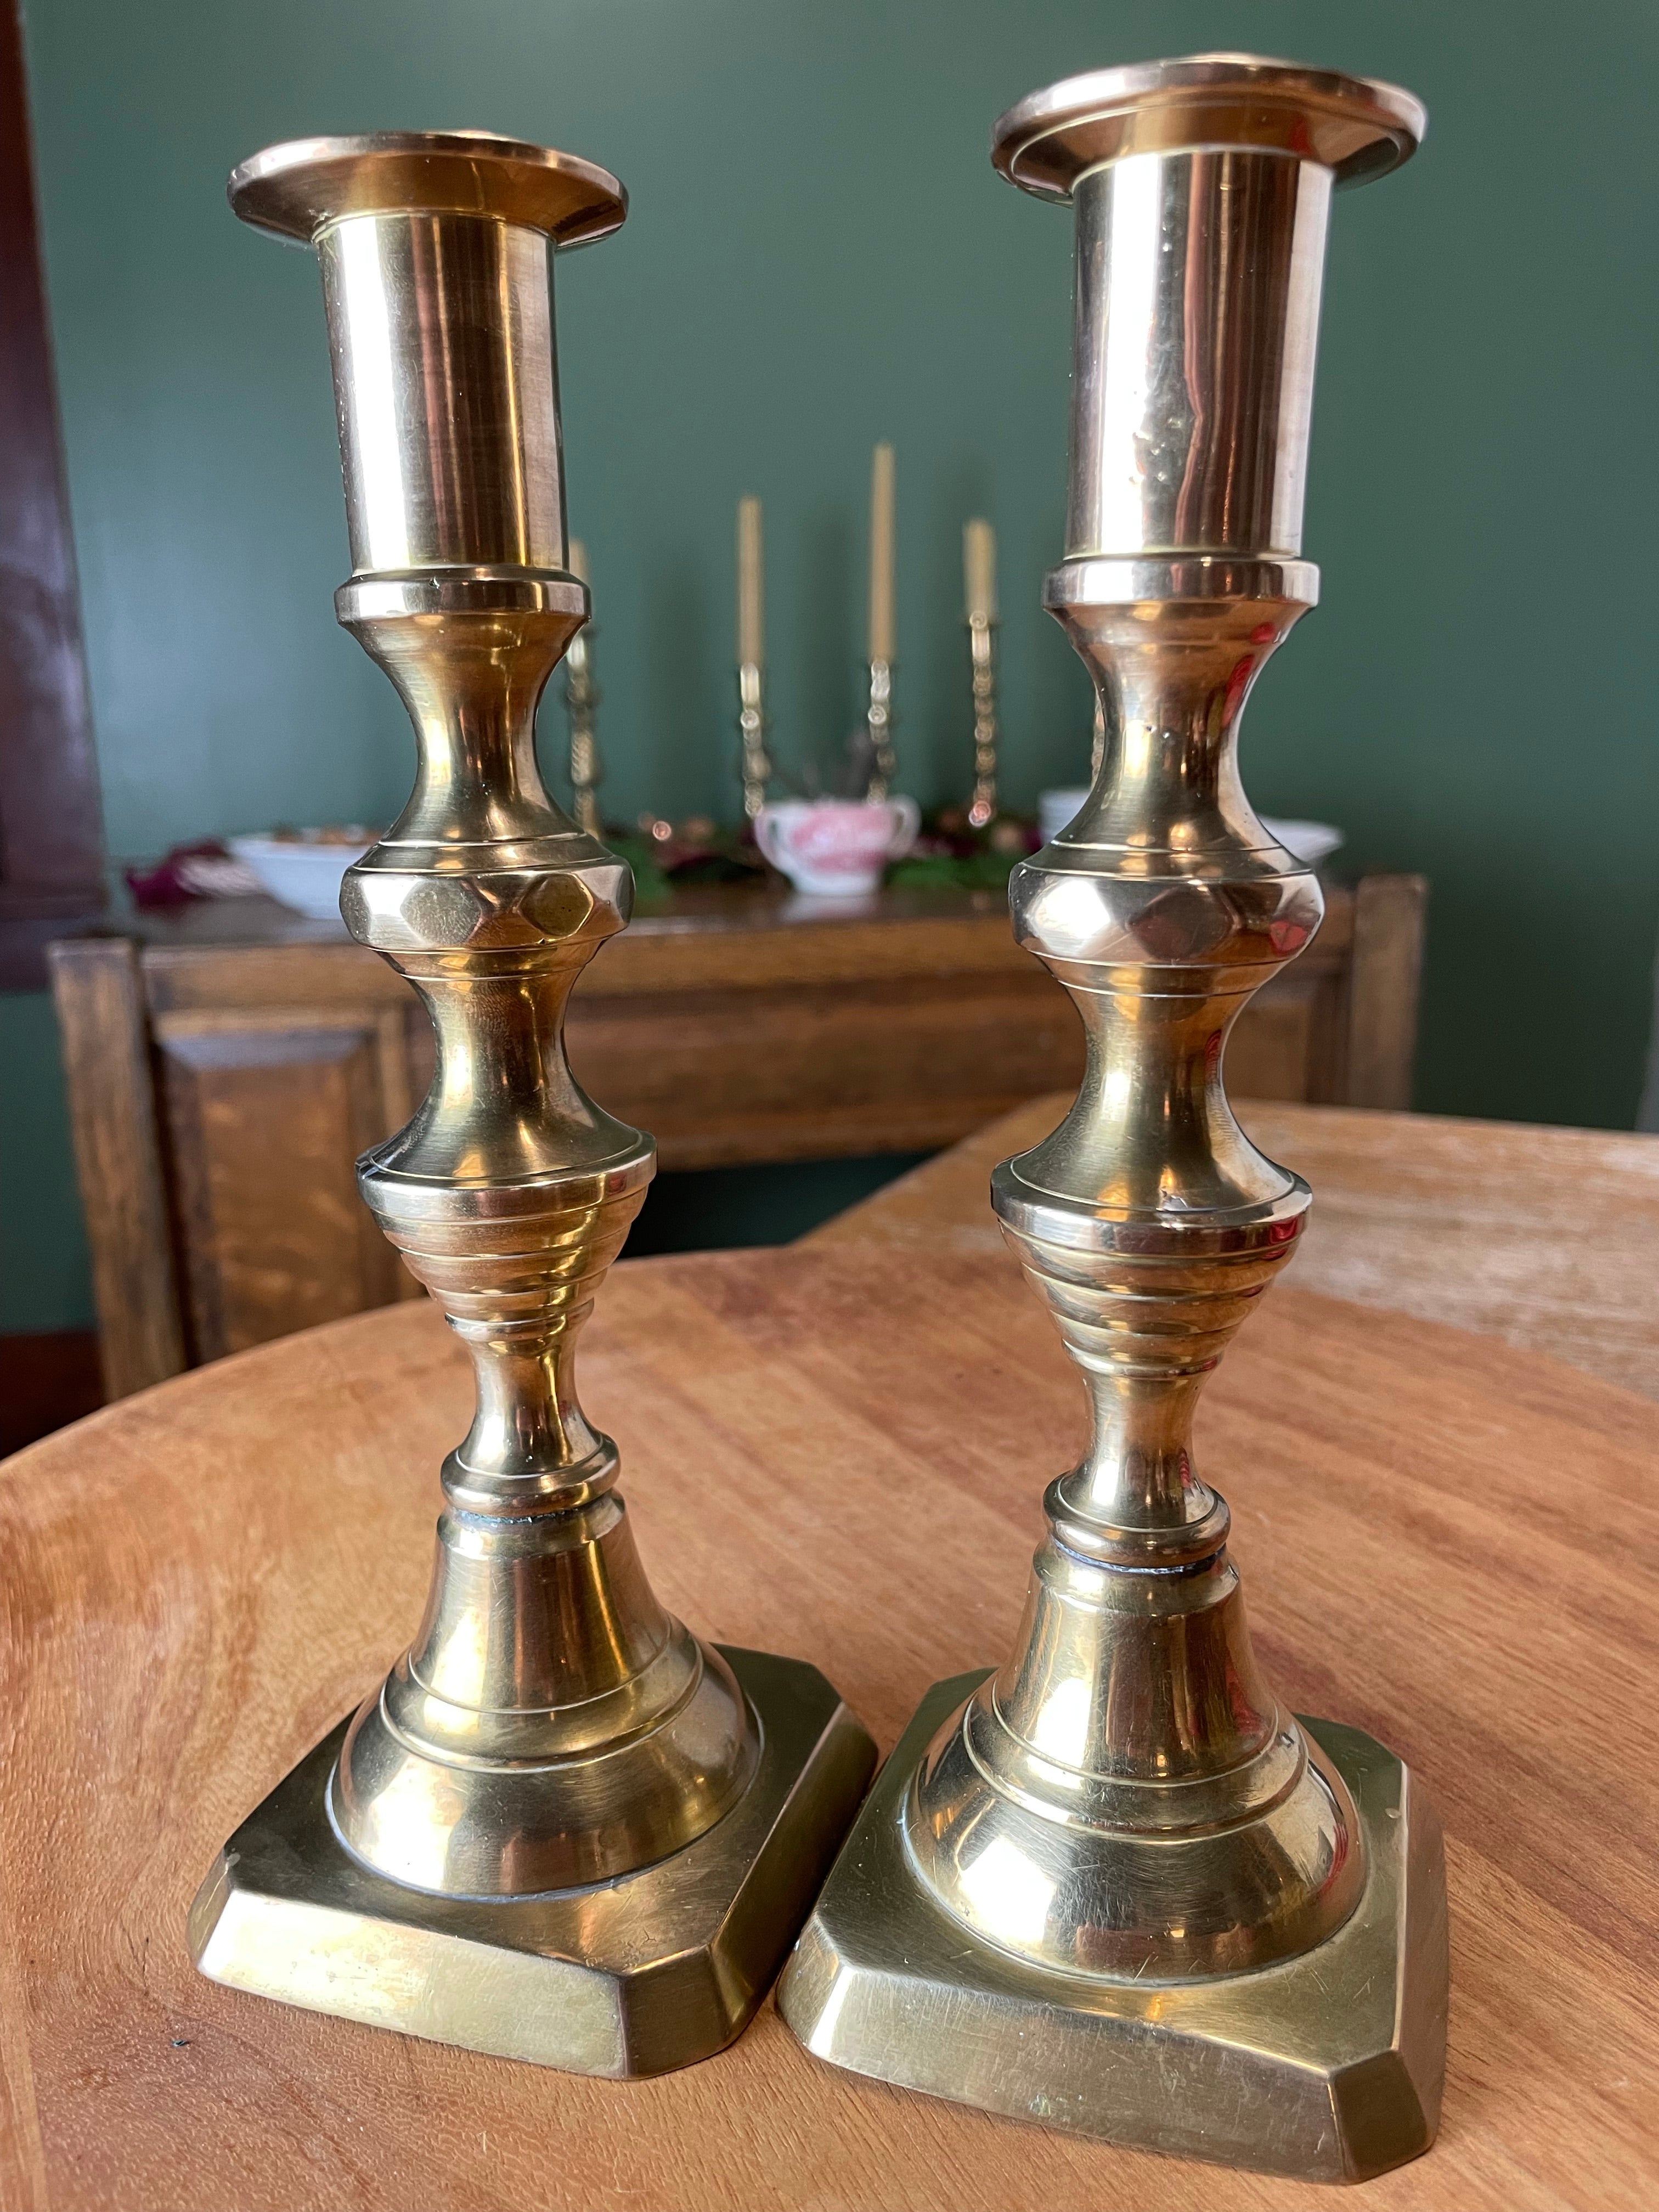 Pair of Antique English Brass Candlesticks English Antiques - Caledonian,  Inc. Barrington, Il - 60010 (847) 381-0569